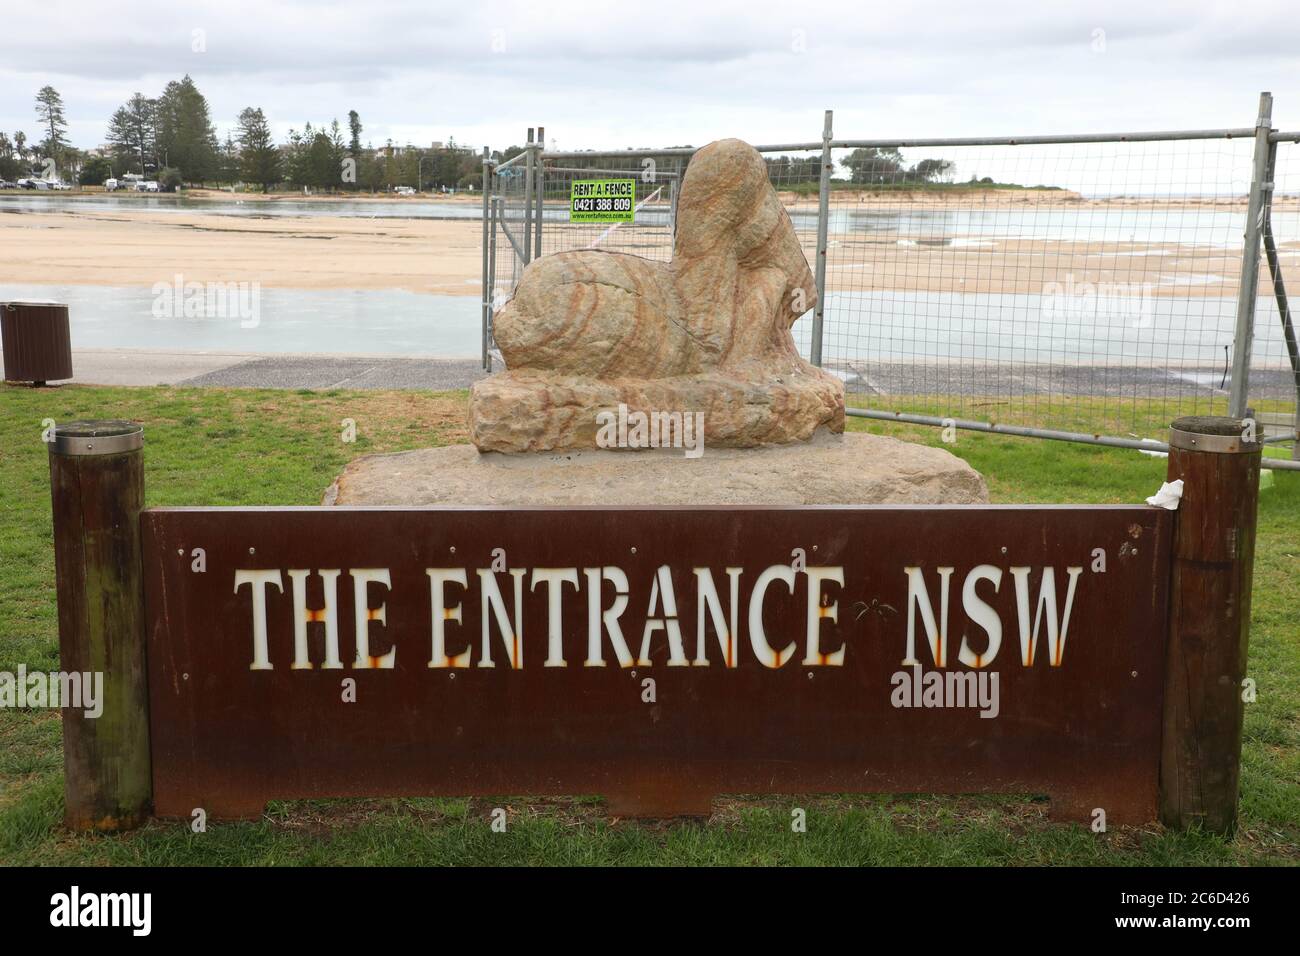 Pelican statue at The Entrance, Central Coast, NSW, Australia Stock Photo